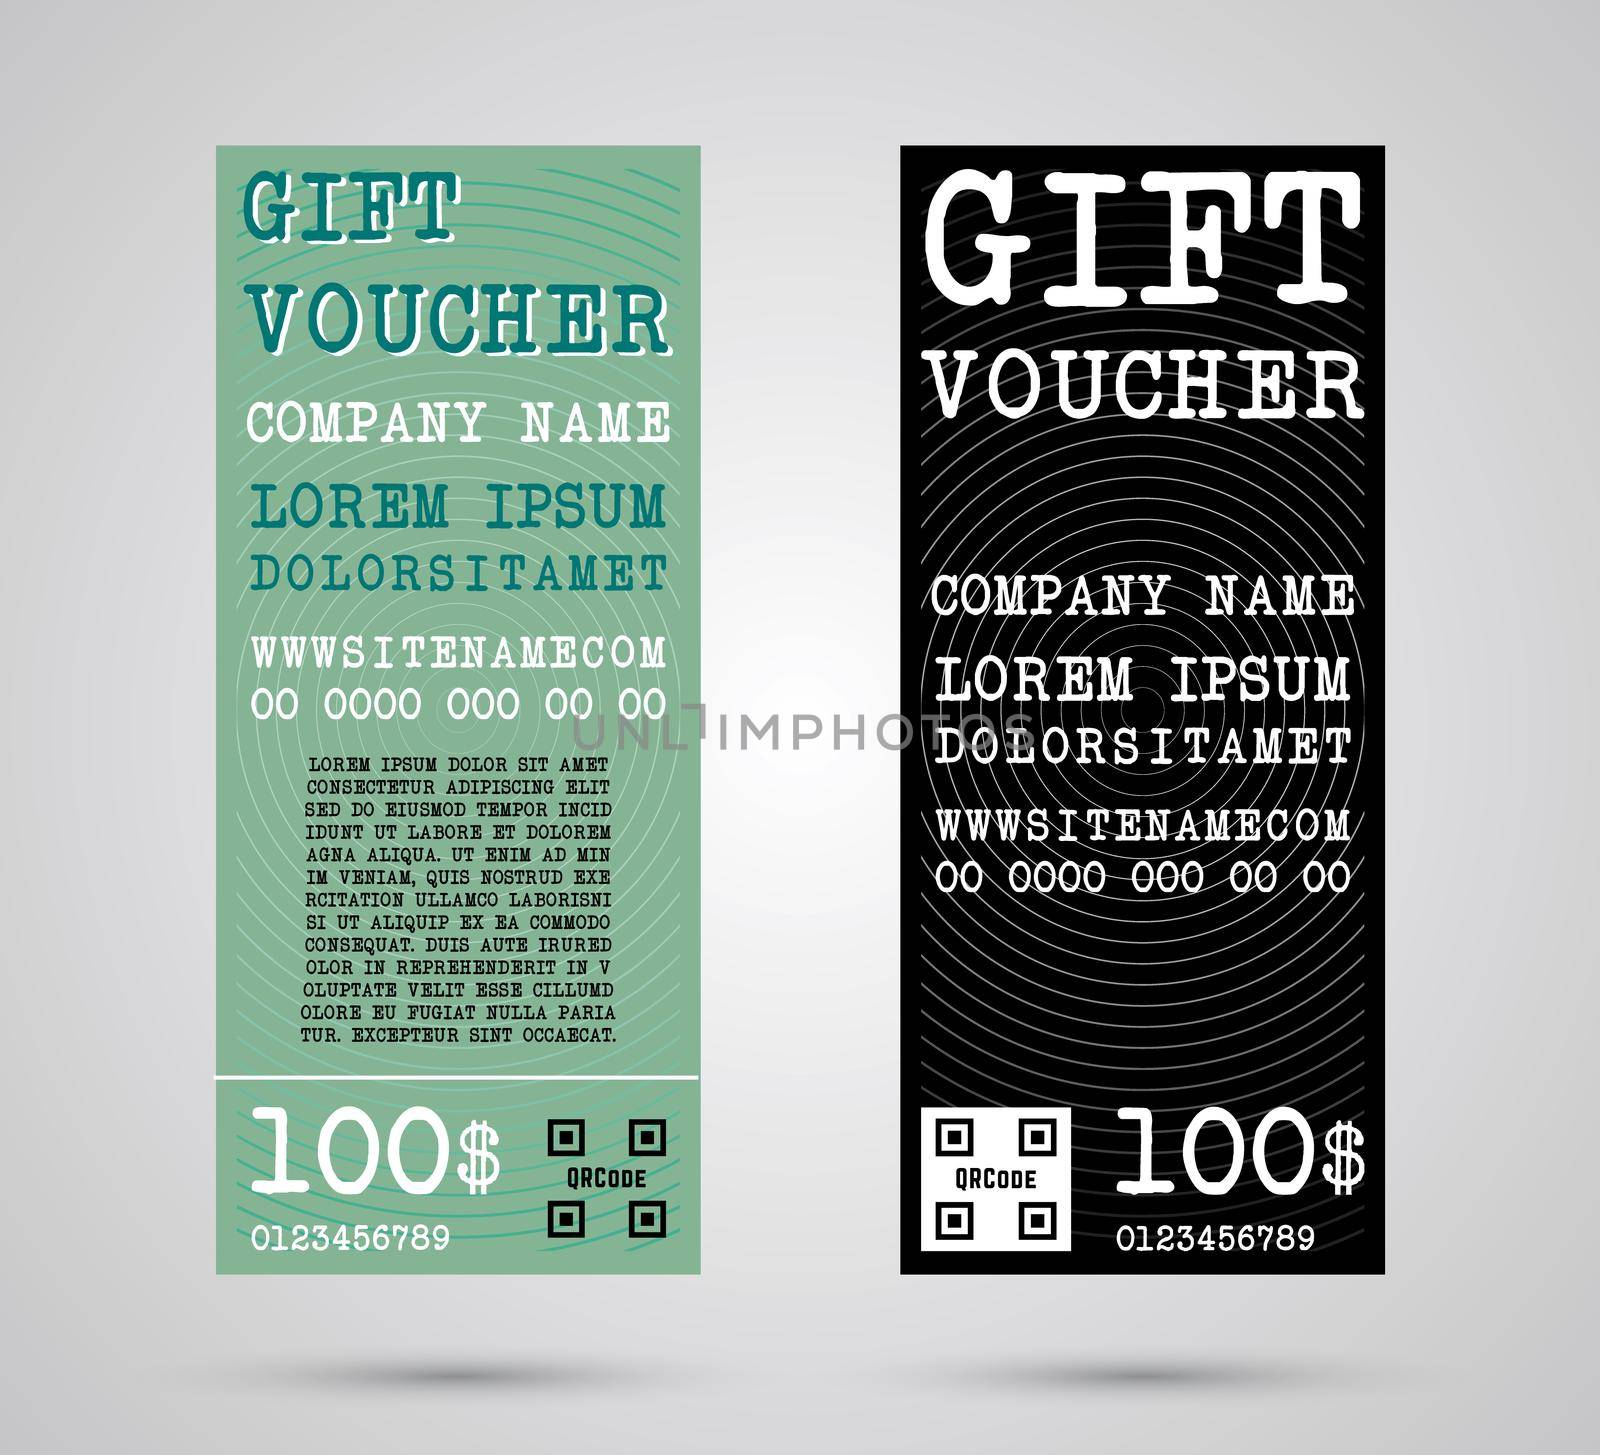 Gift voucher template. Trendy simple flyer design. Vector illustration.